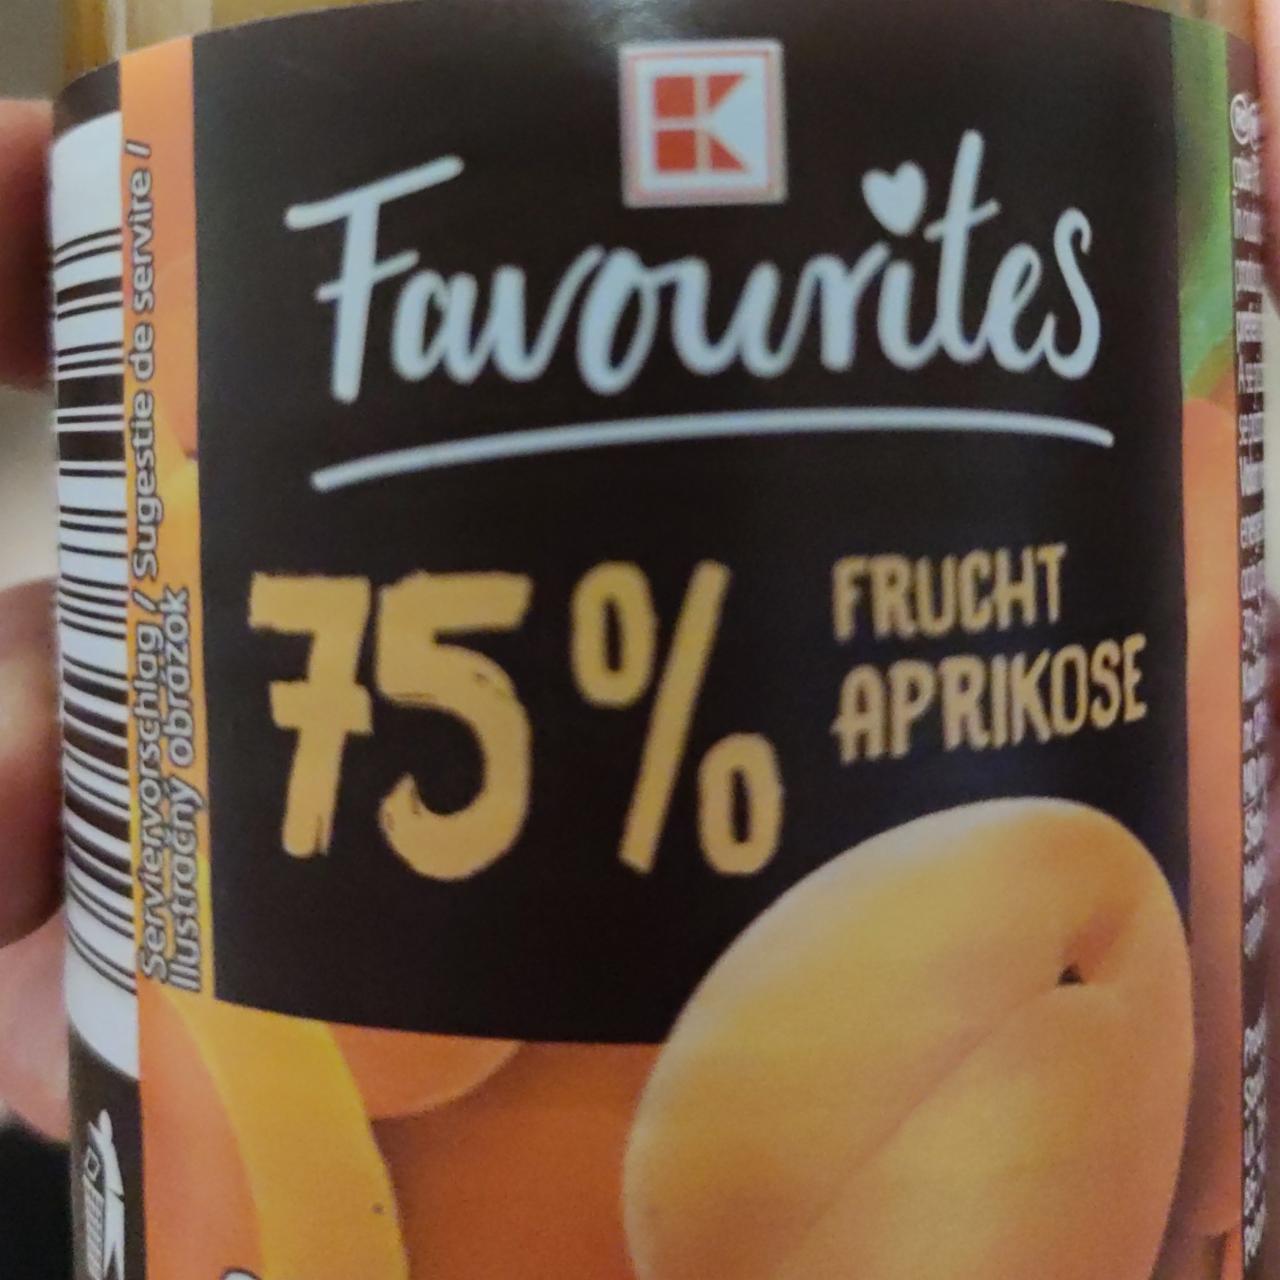 Fotografie - 75% Frucht Aprikose K-Favourites